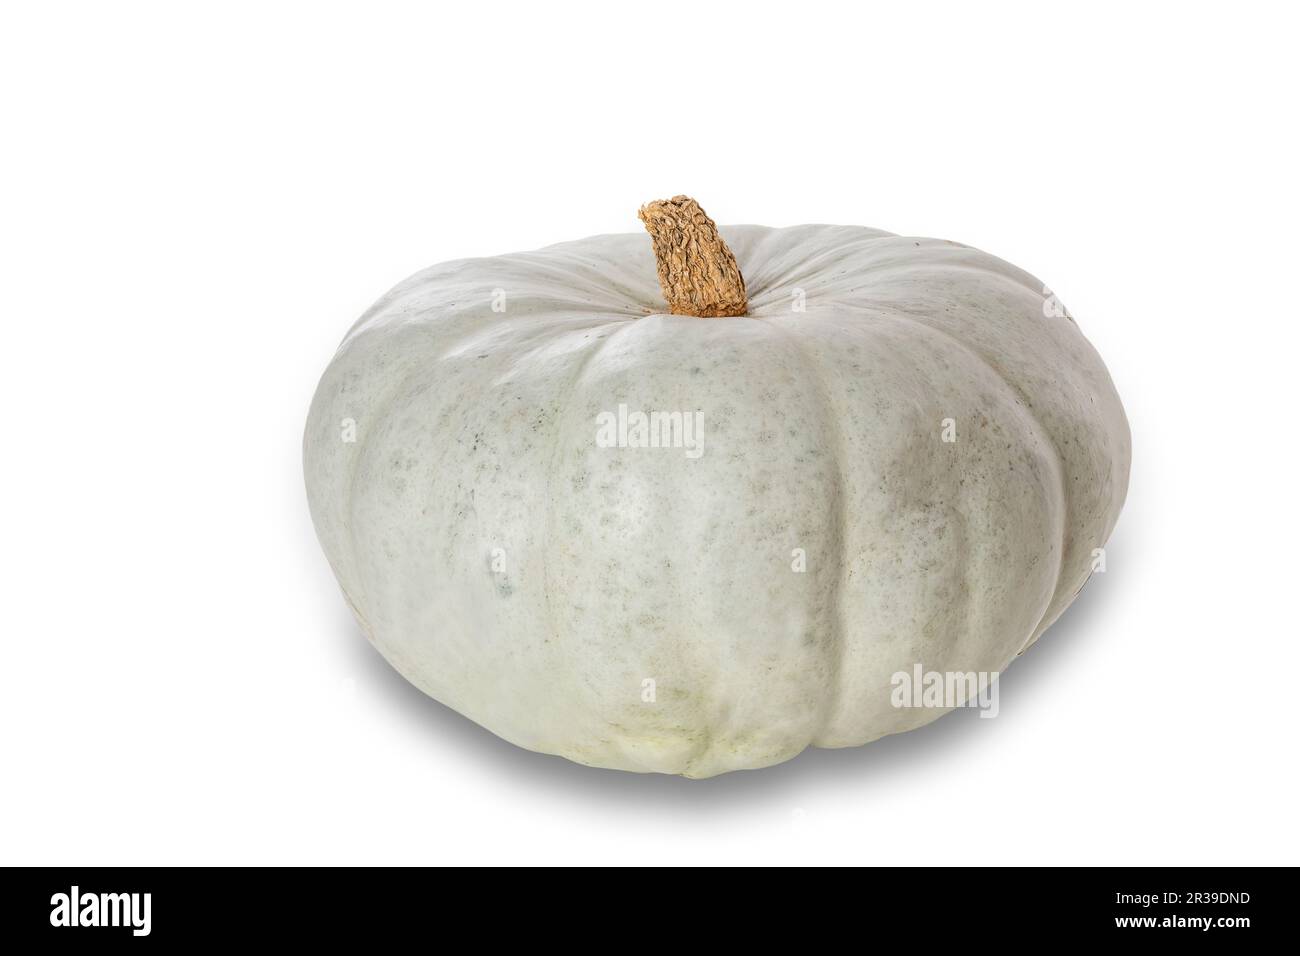 Crown Prince variety pumpkin on white background Stock Photo